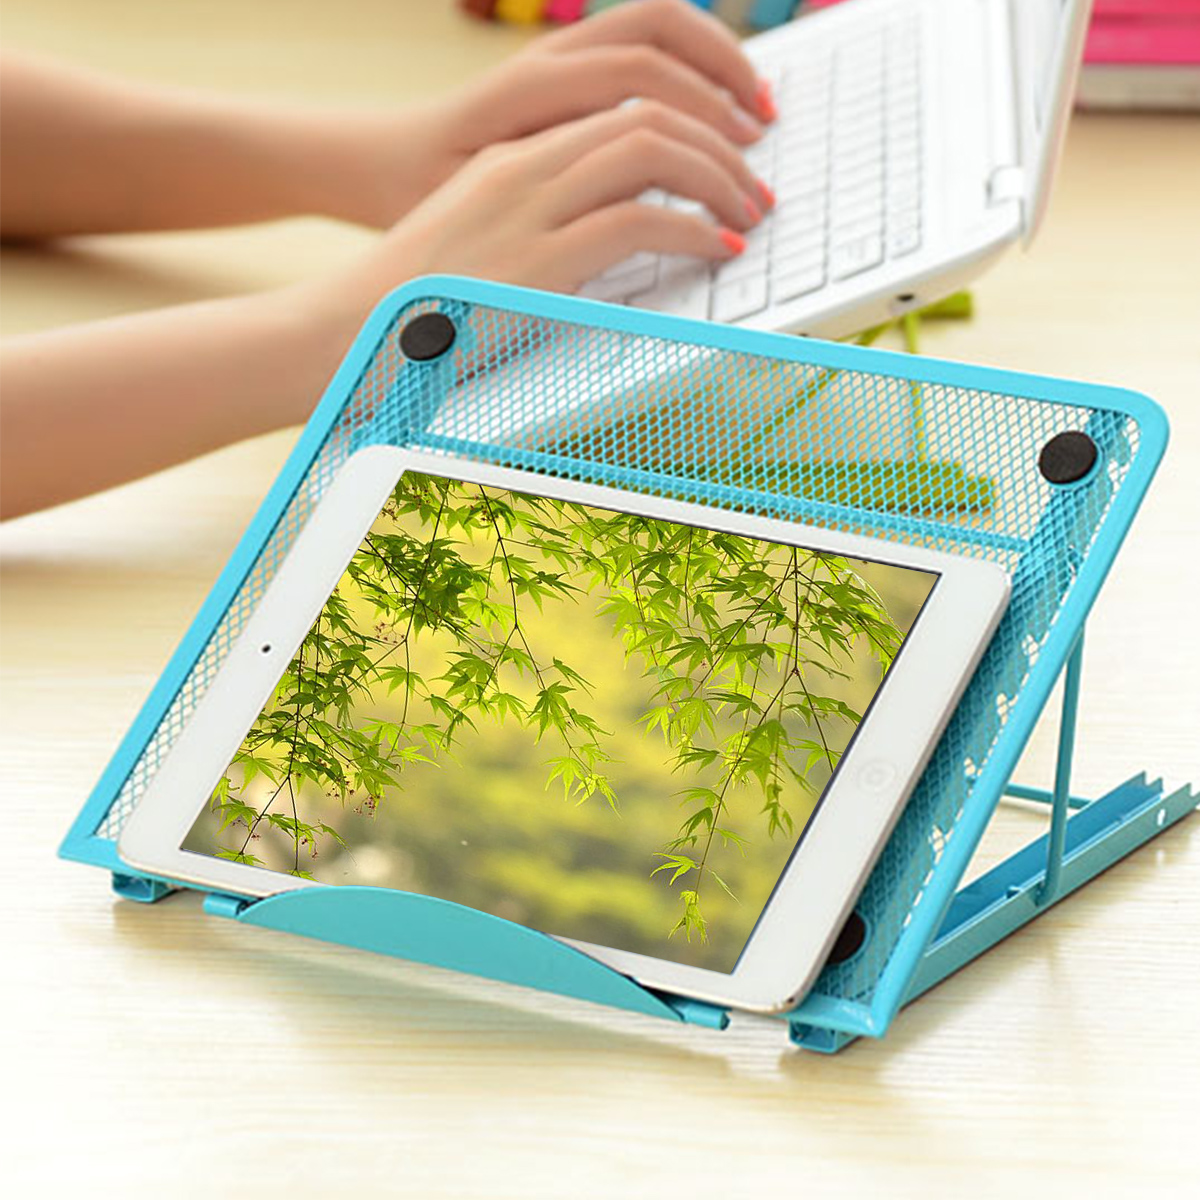 Portable-Adjustable-Angle-Heat-Dissipation-Mesh-Telecommuting-Online-Learning-Desktop-Tablet-Laptop--1673670-24